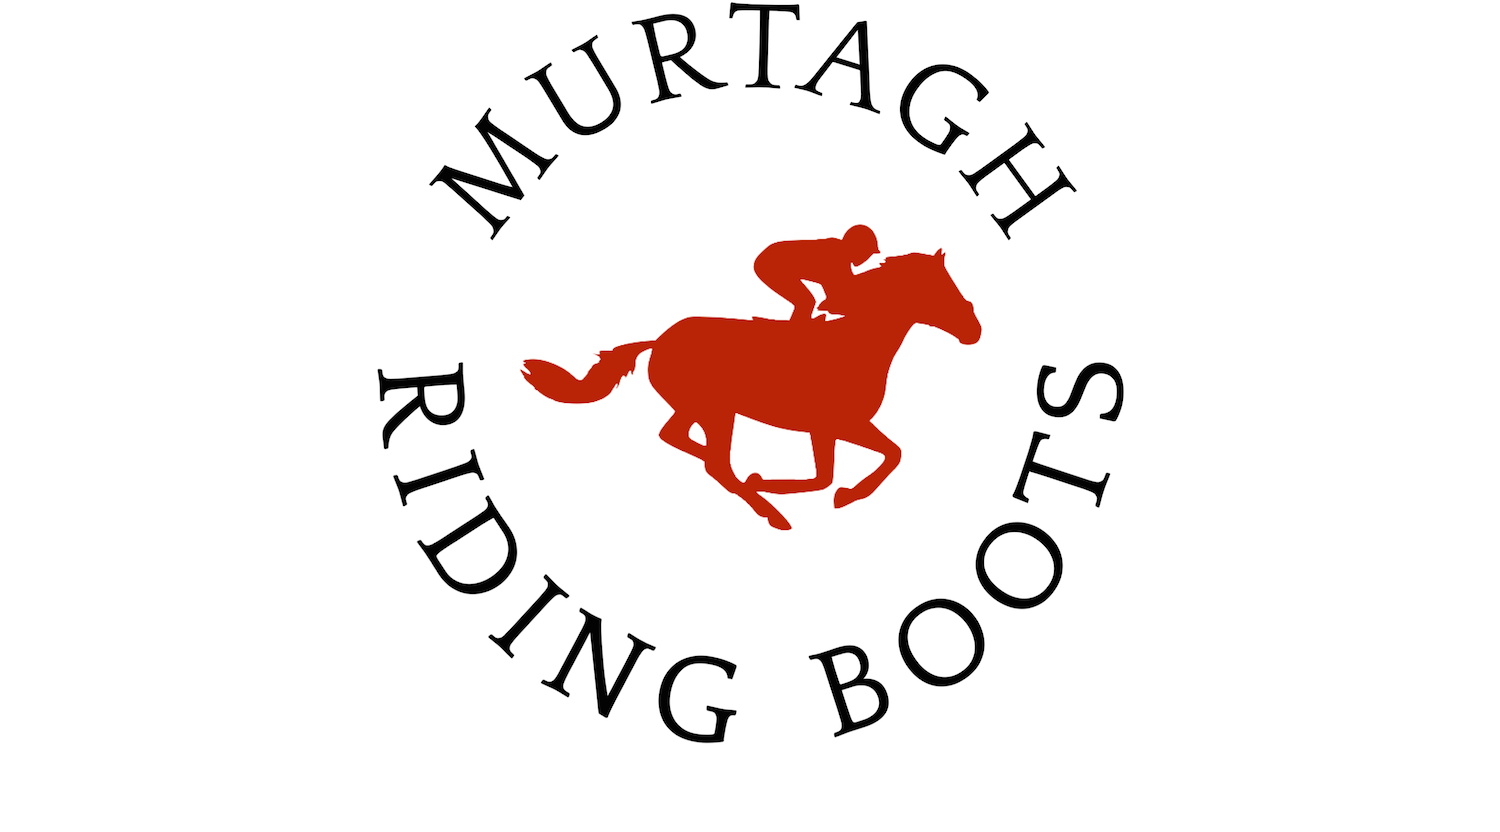 Murtagh Riding Boots